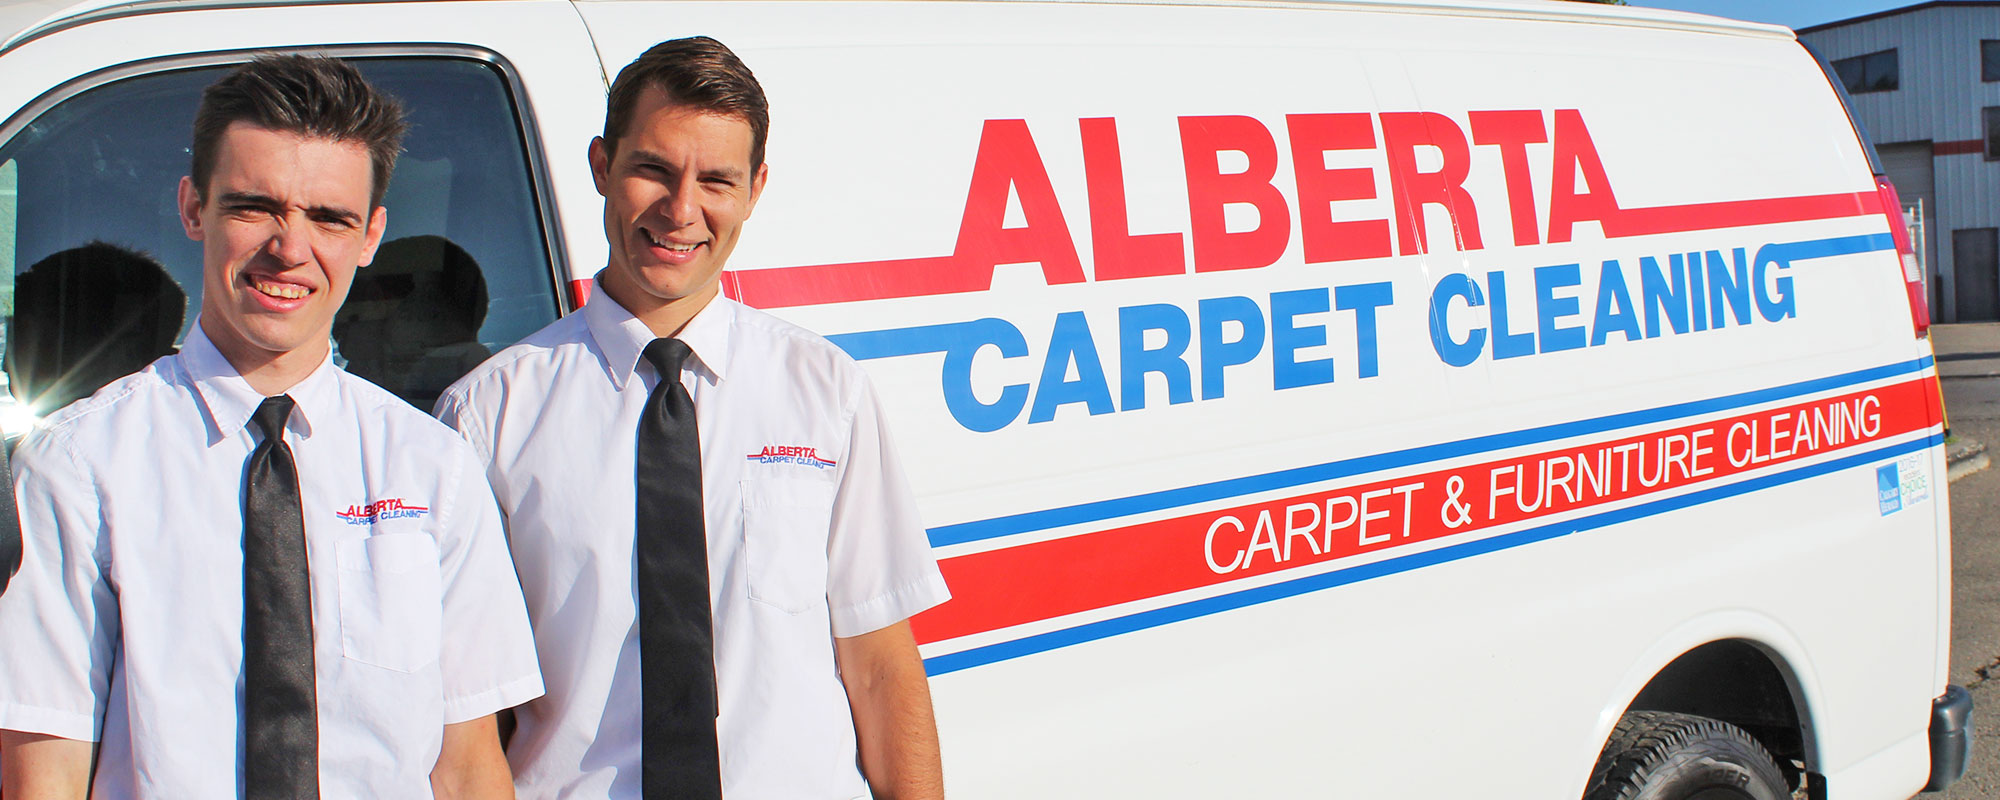 Alberta Carpet Cleaning Calgary Technicians posing